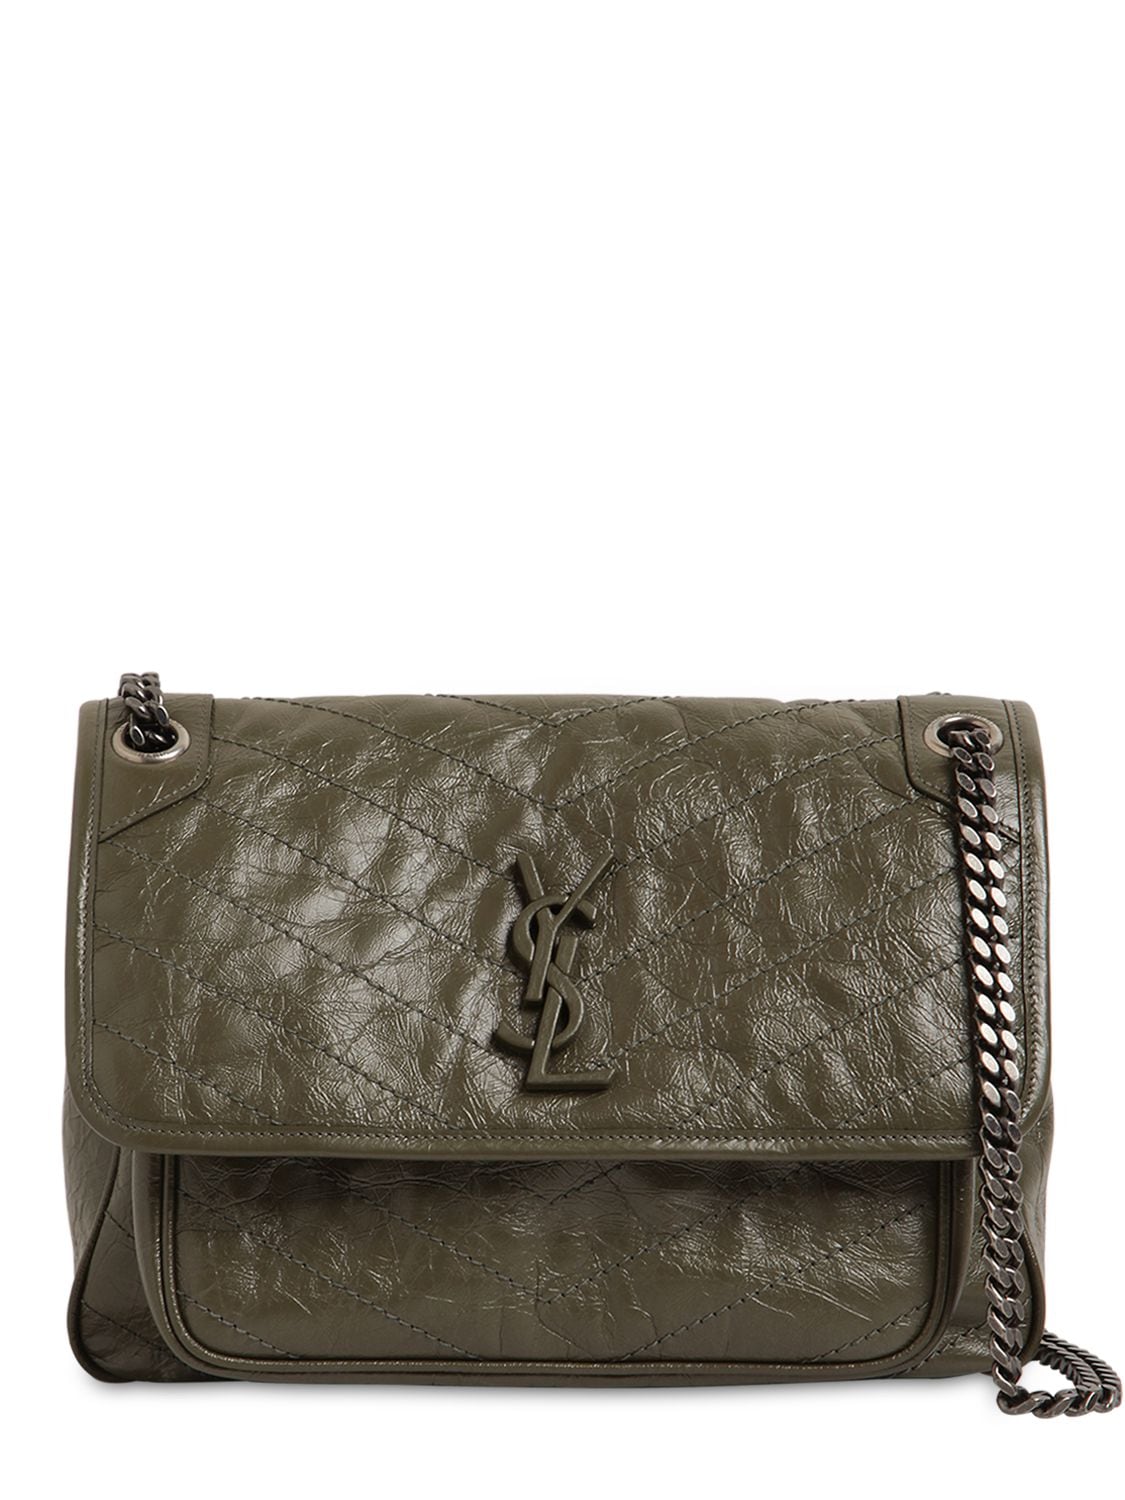 Saint Laurent Medium Niki Monogram Leather Bag In Olive Green